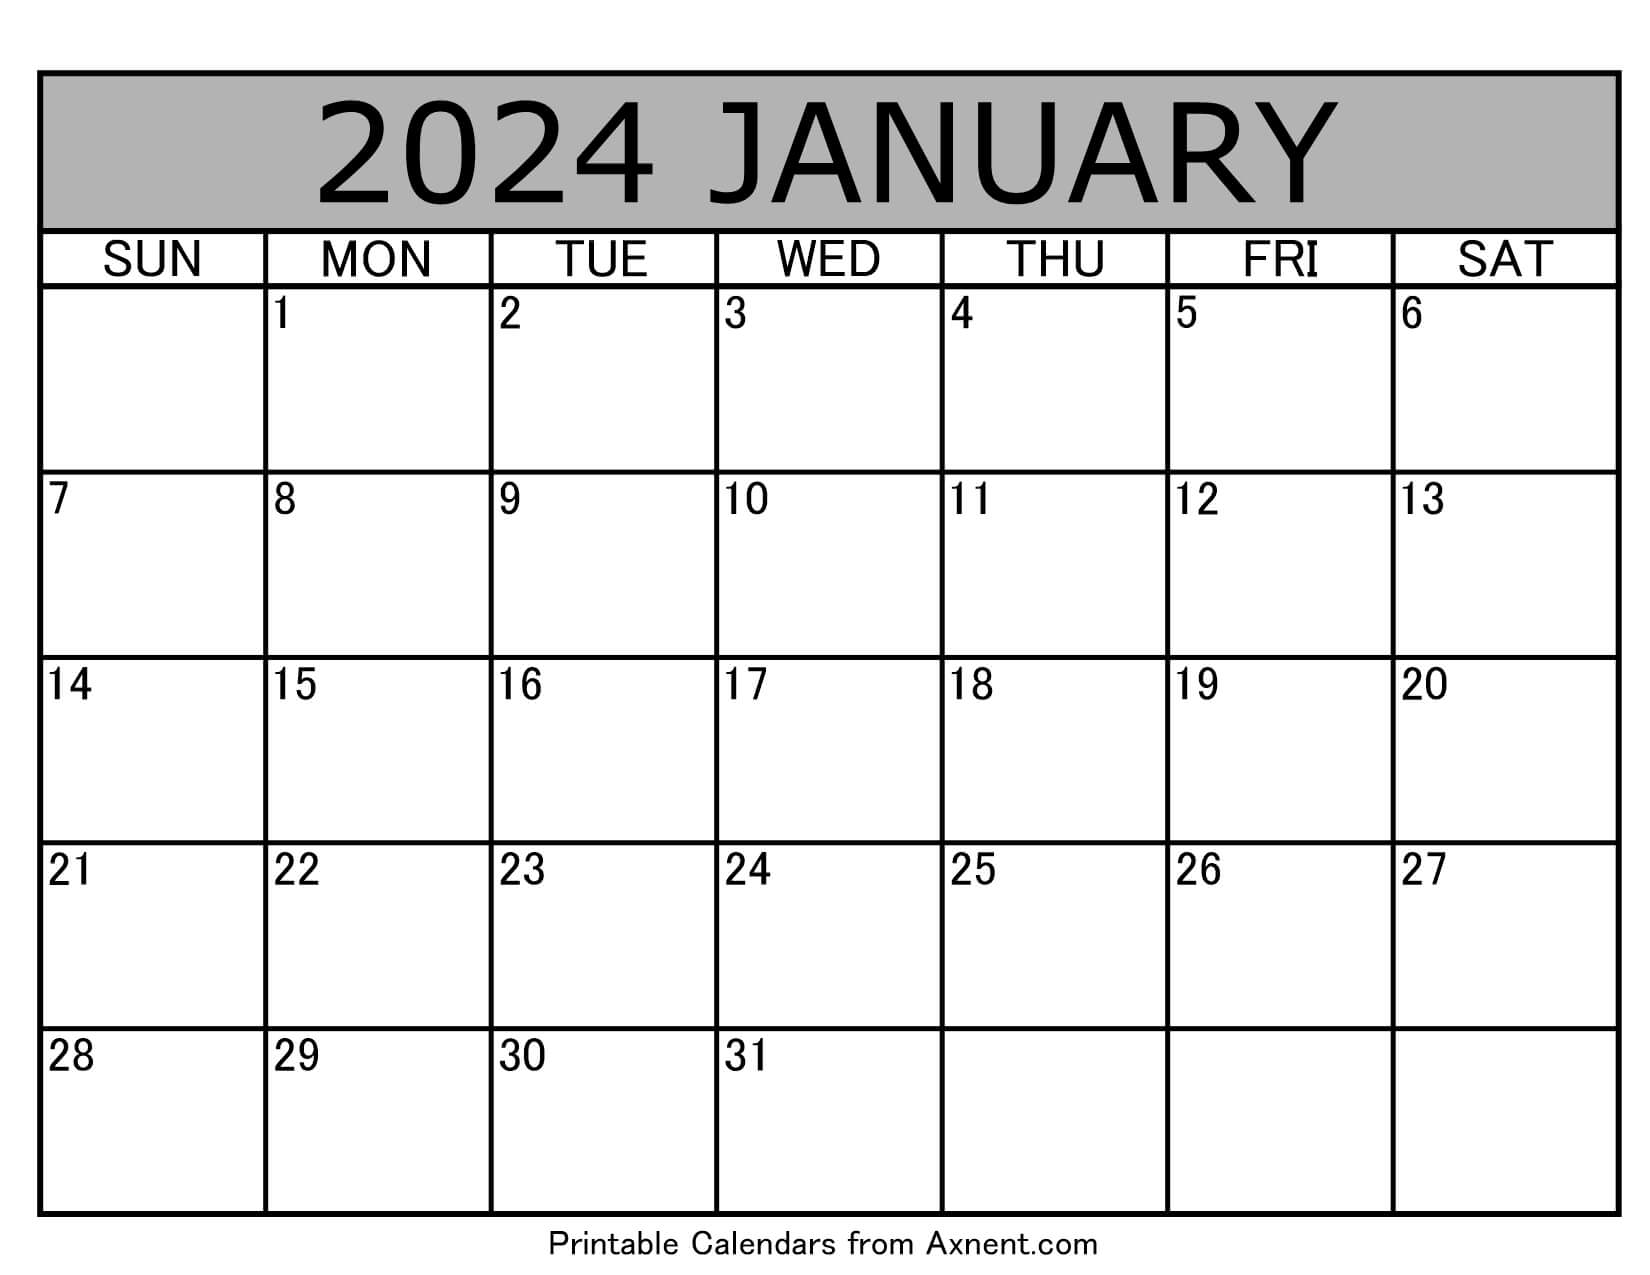 January 2024 Calendar Template